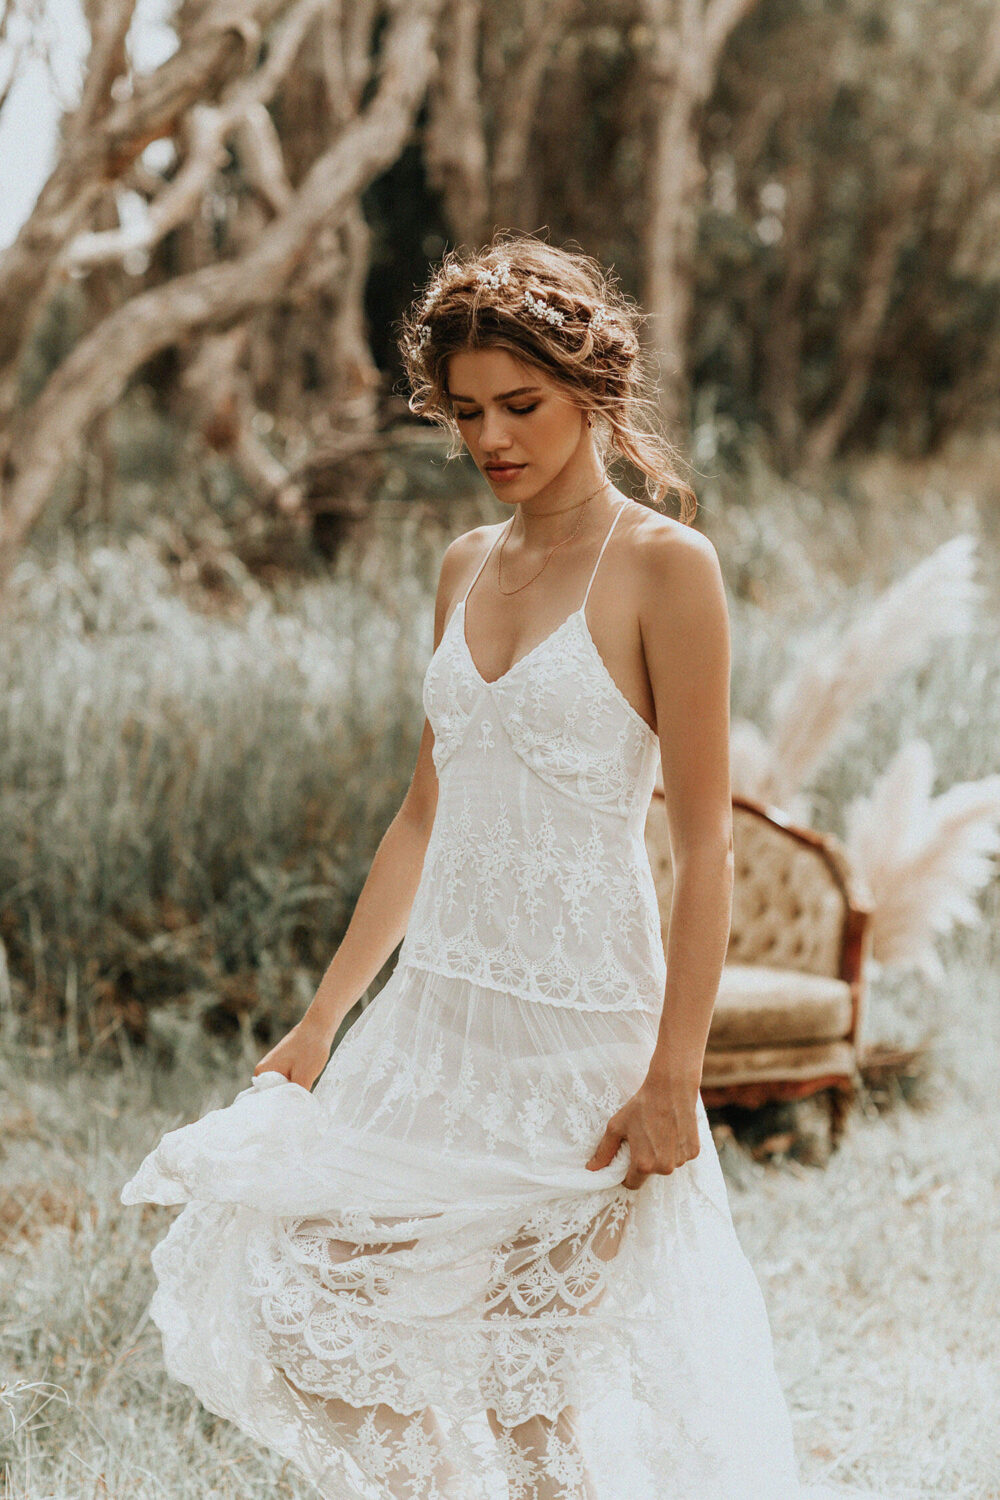 Bohemian Wedding Dress – How to Look Breathtaking - Royal Wedding Gypsy Boho Dress